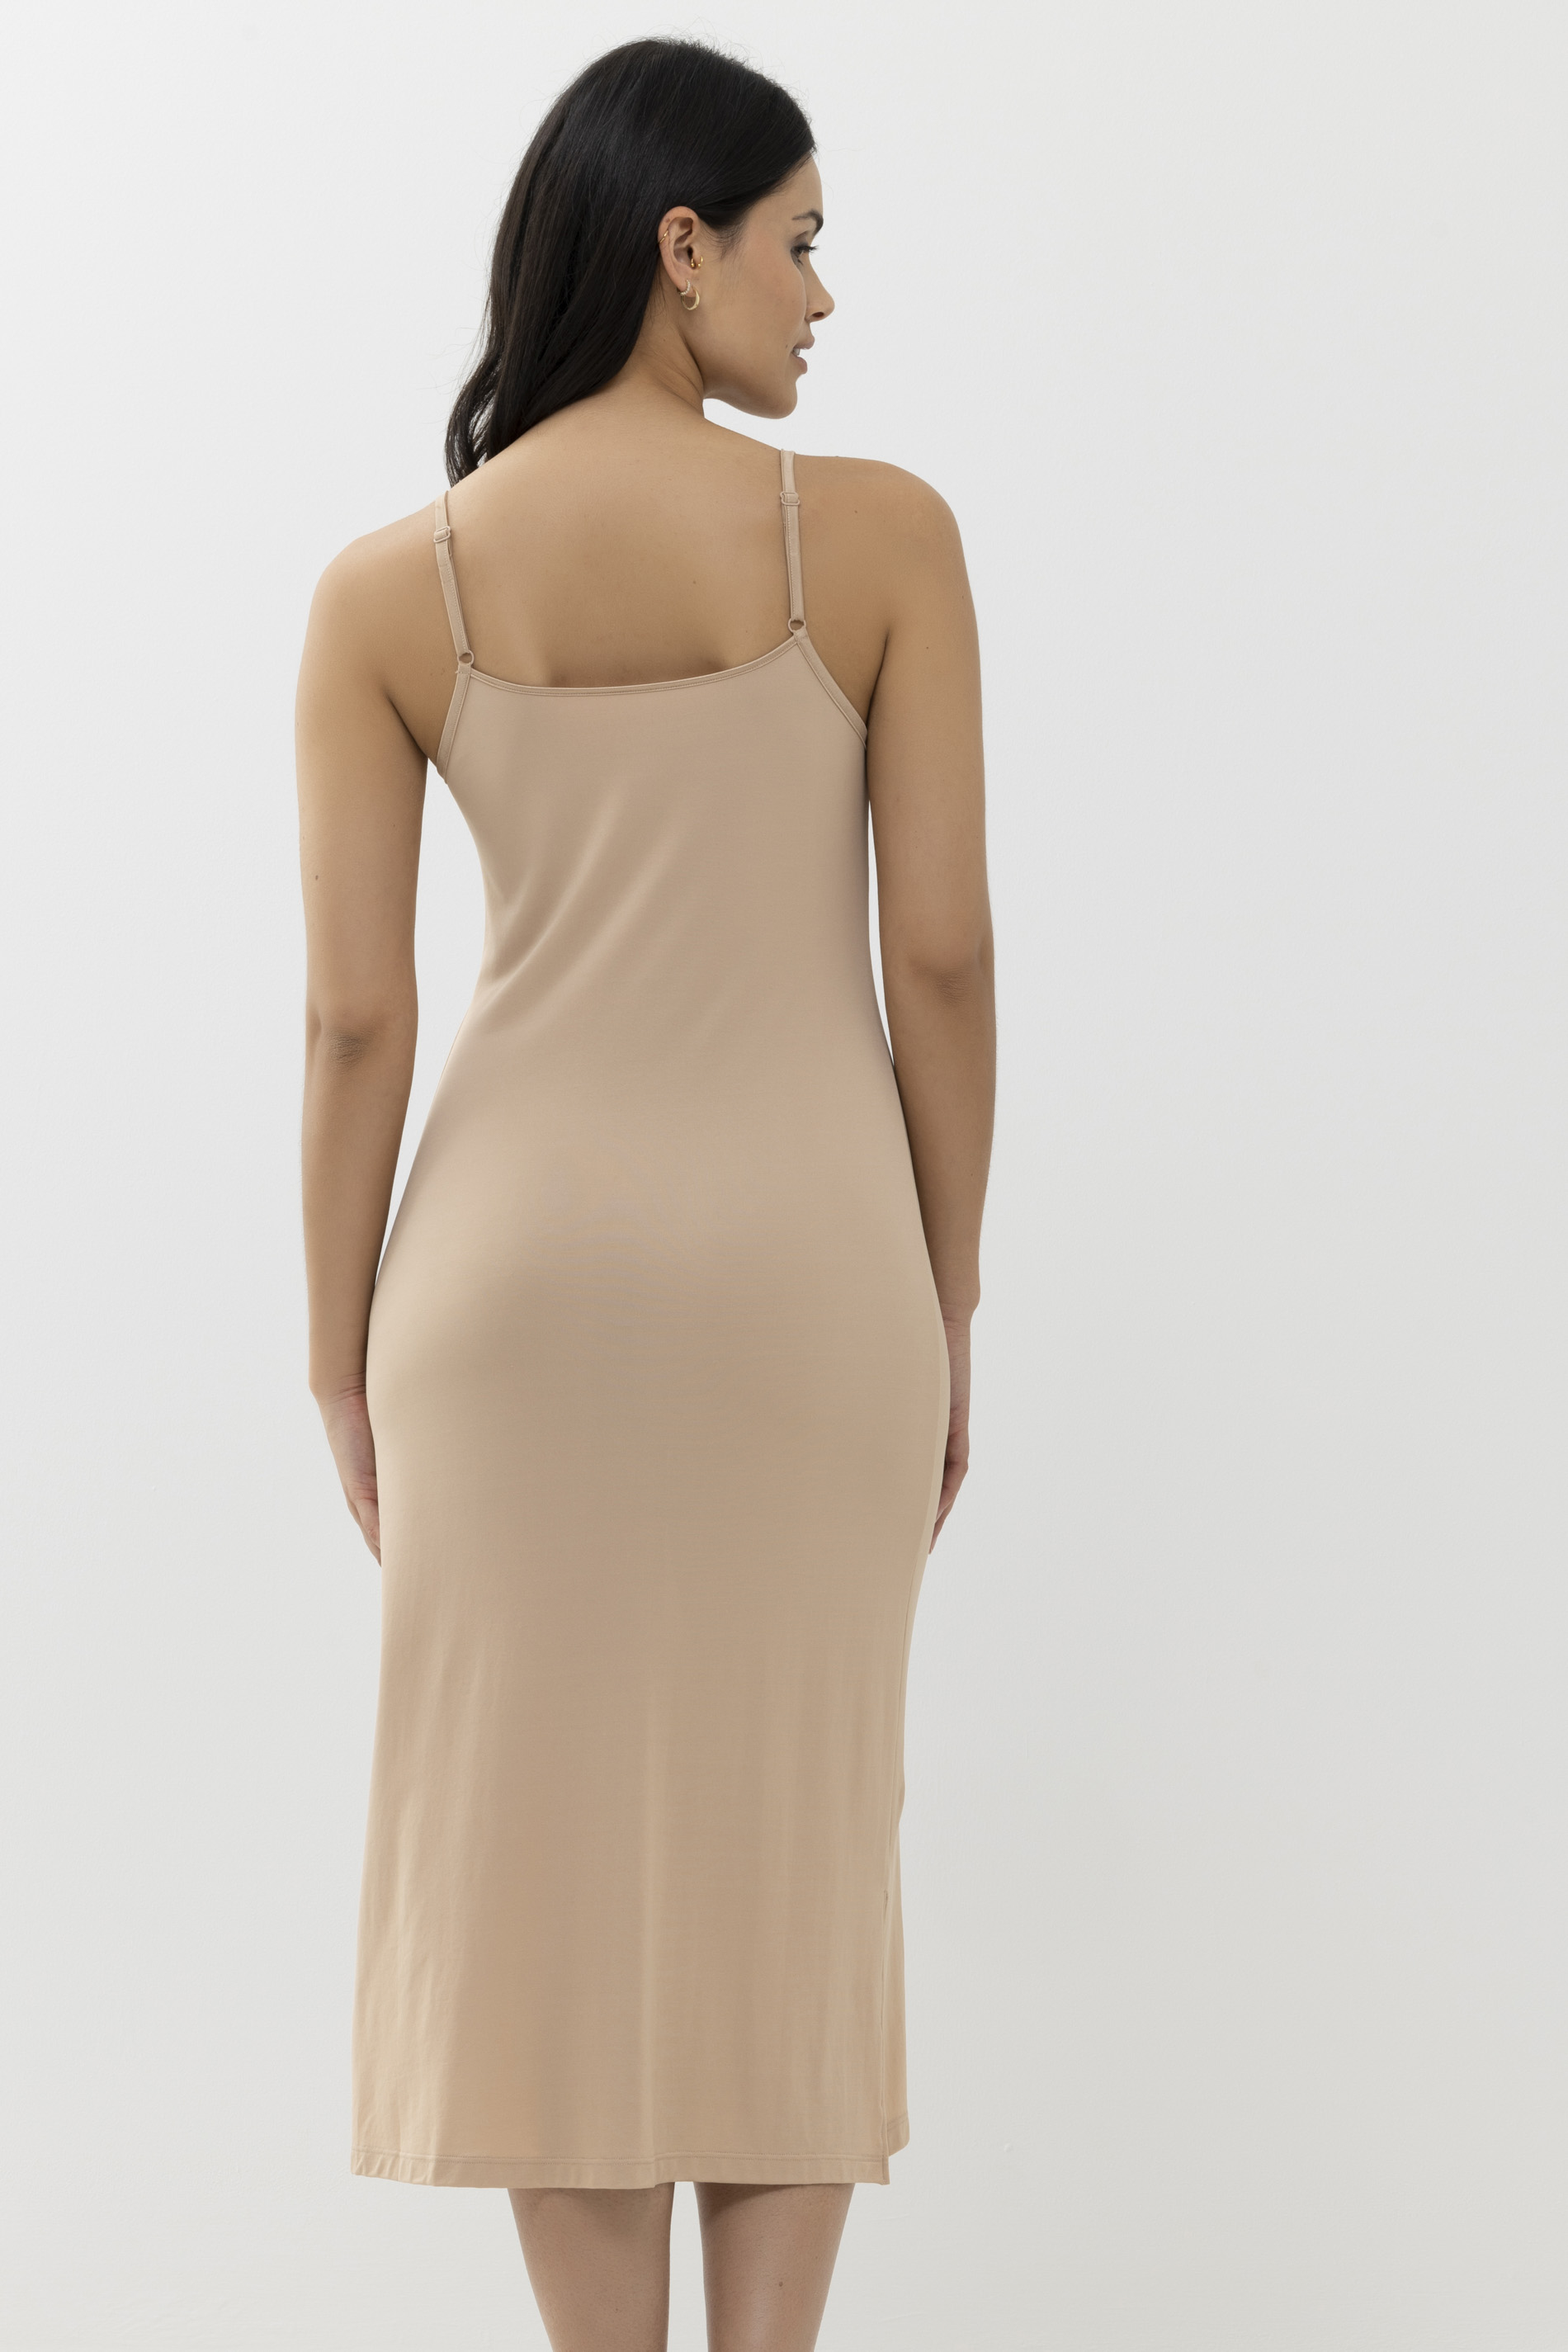 Body dress Cream Tan Serie Emotion Rear View | mey®